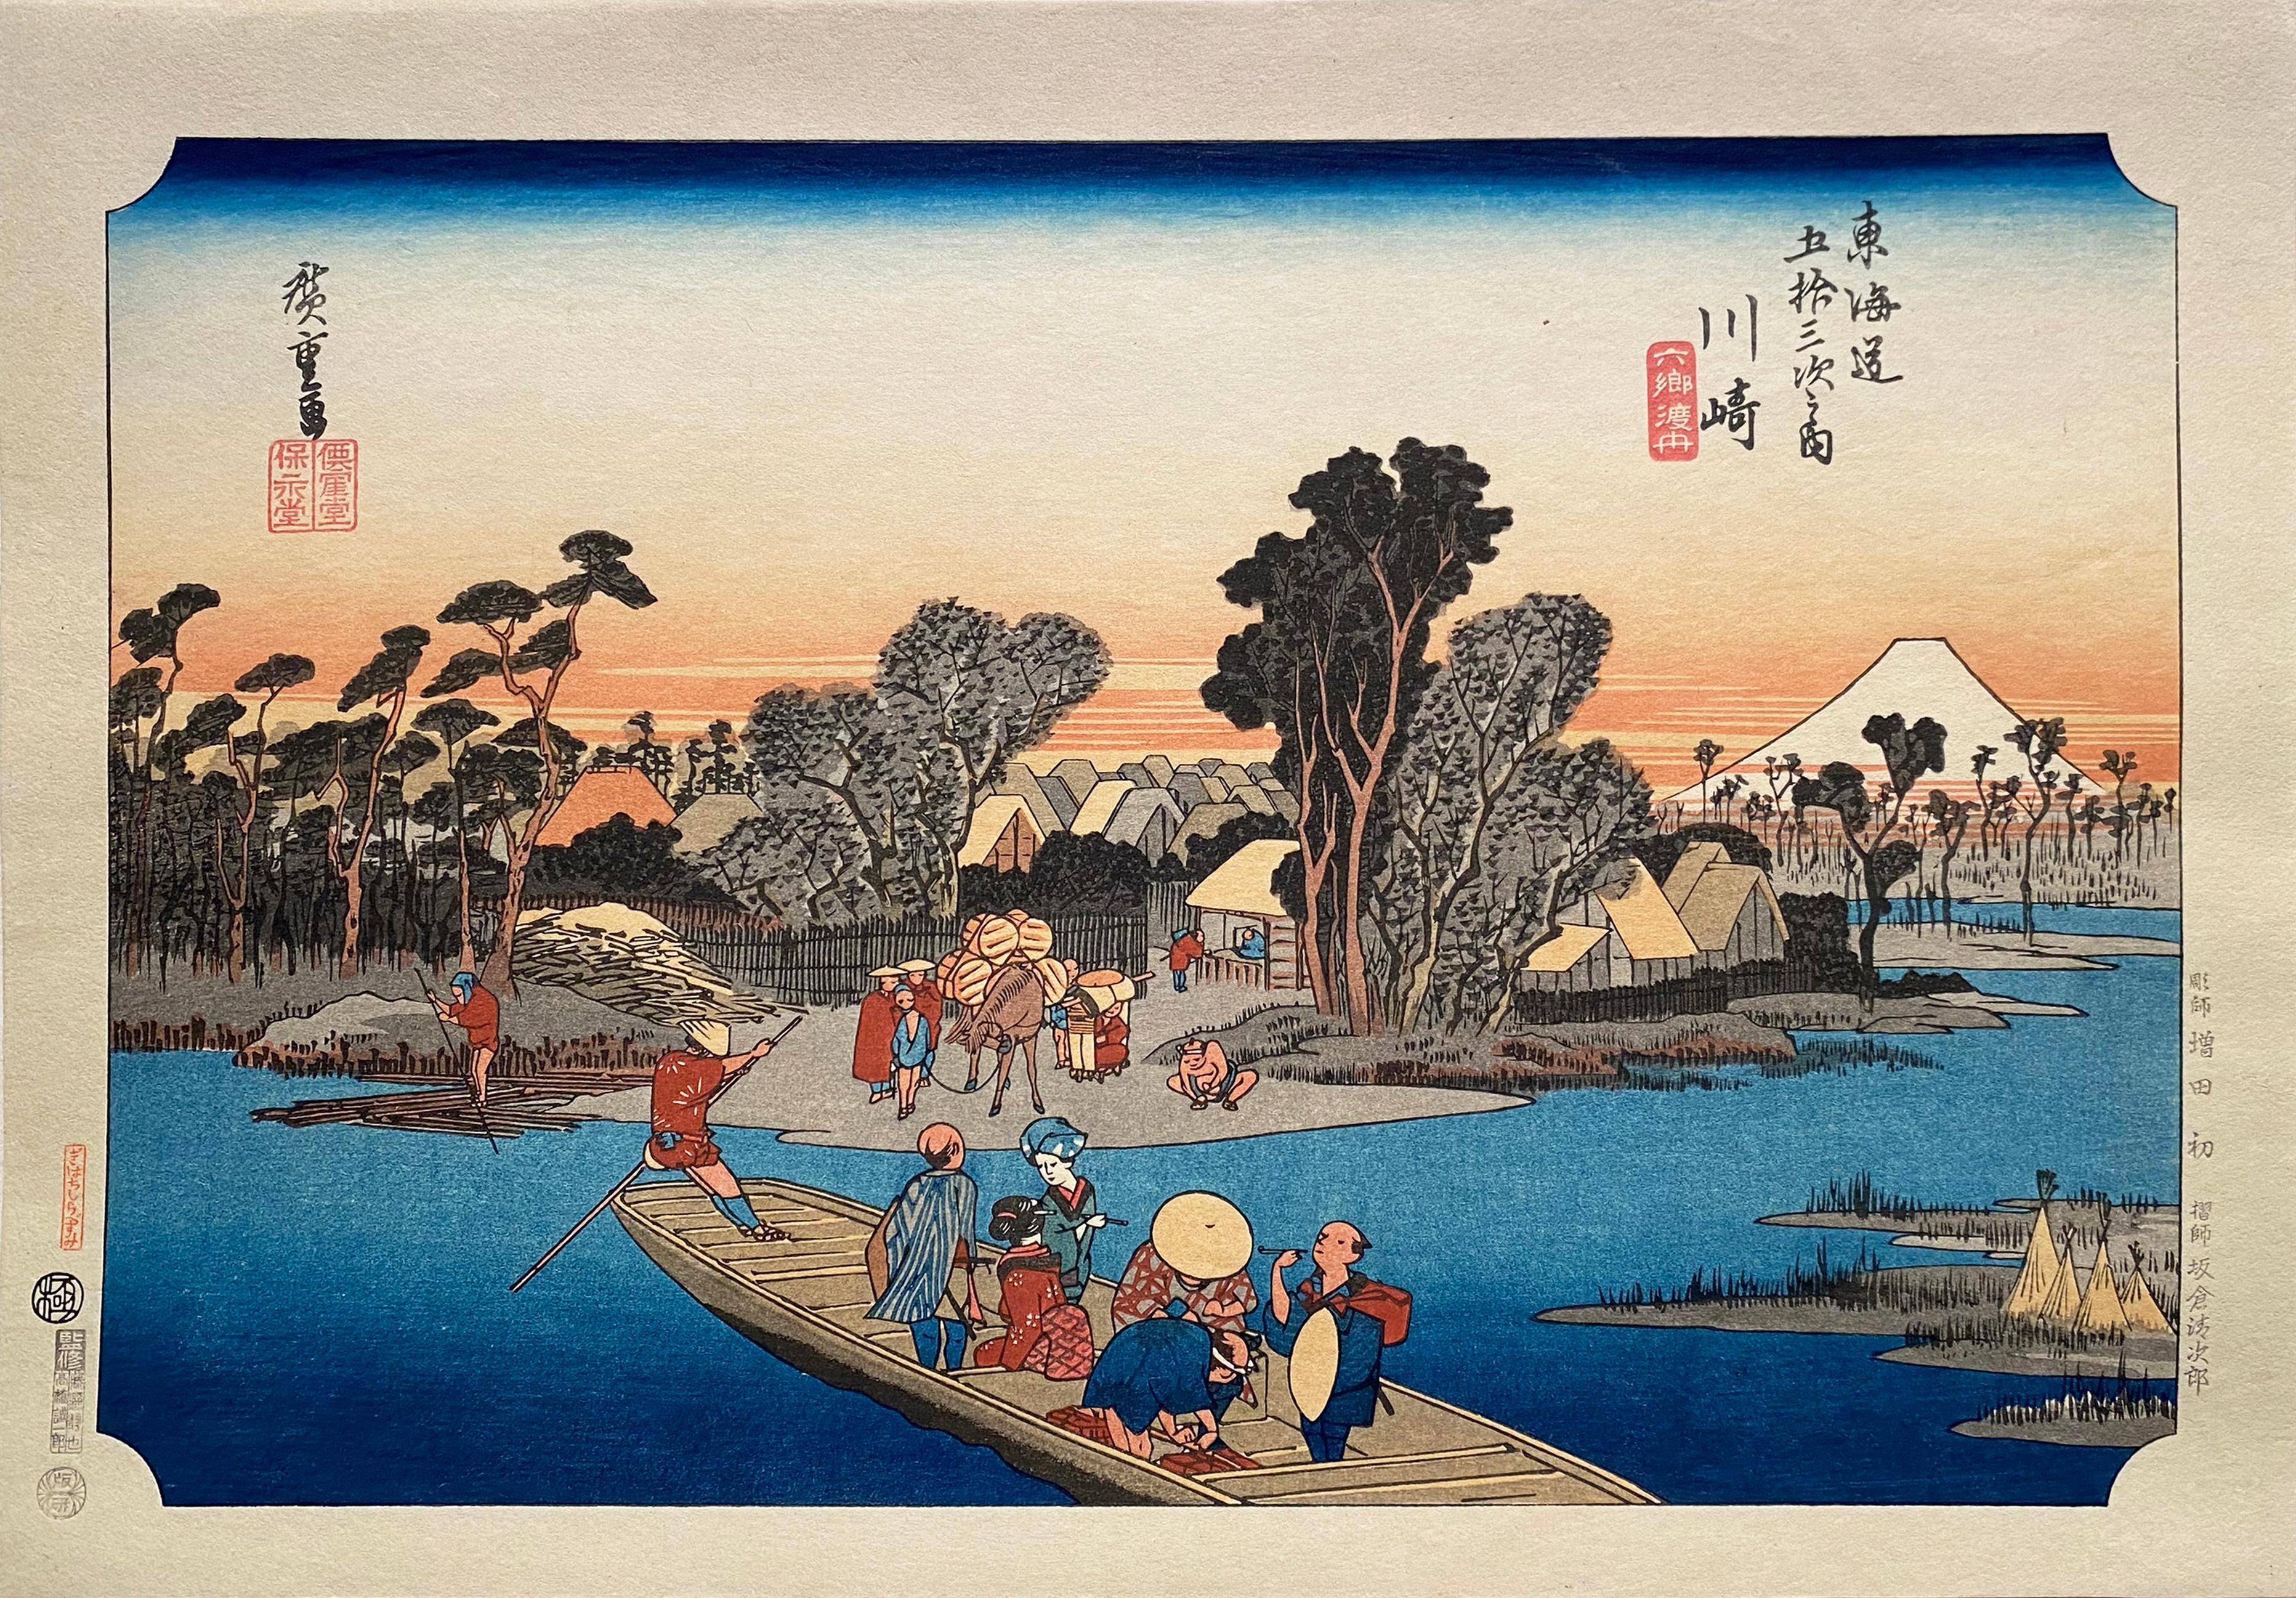 Utagawa Hiroshige (Ando Hiroshige) Landscape Print – Eine Ansicht von Kawasaki", nach Utagawa Hiroshige 歌川廣重, Ukiyo-e Holzschnitt, Tokaido